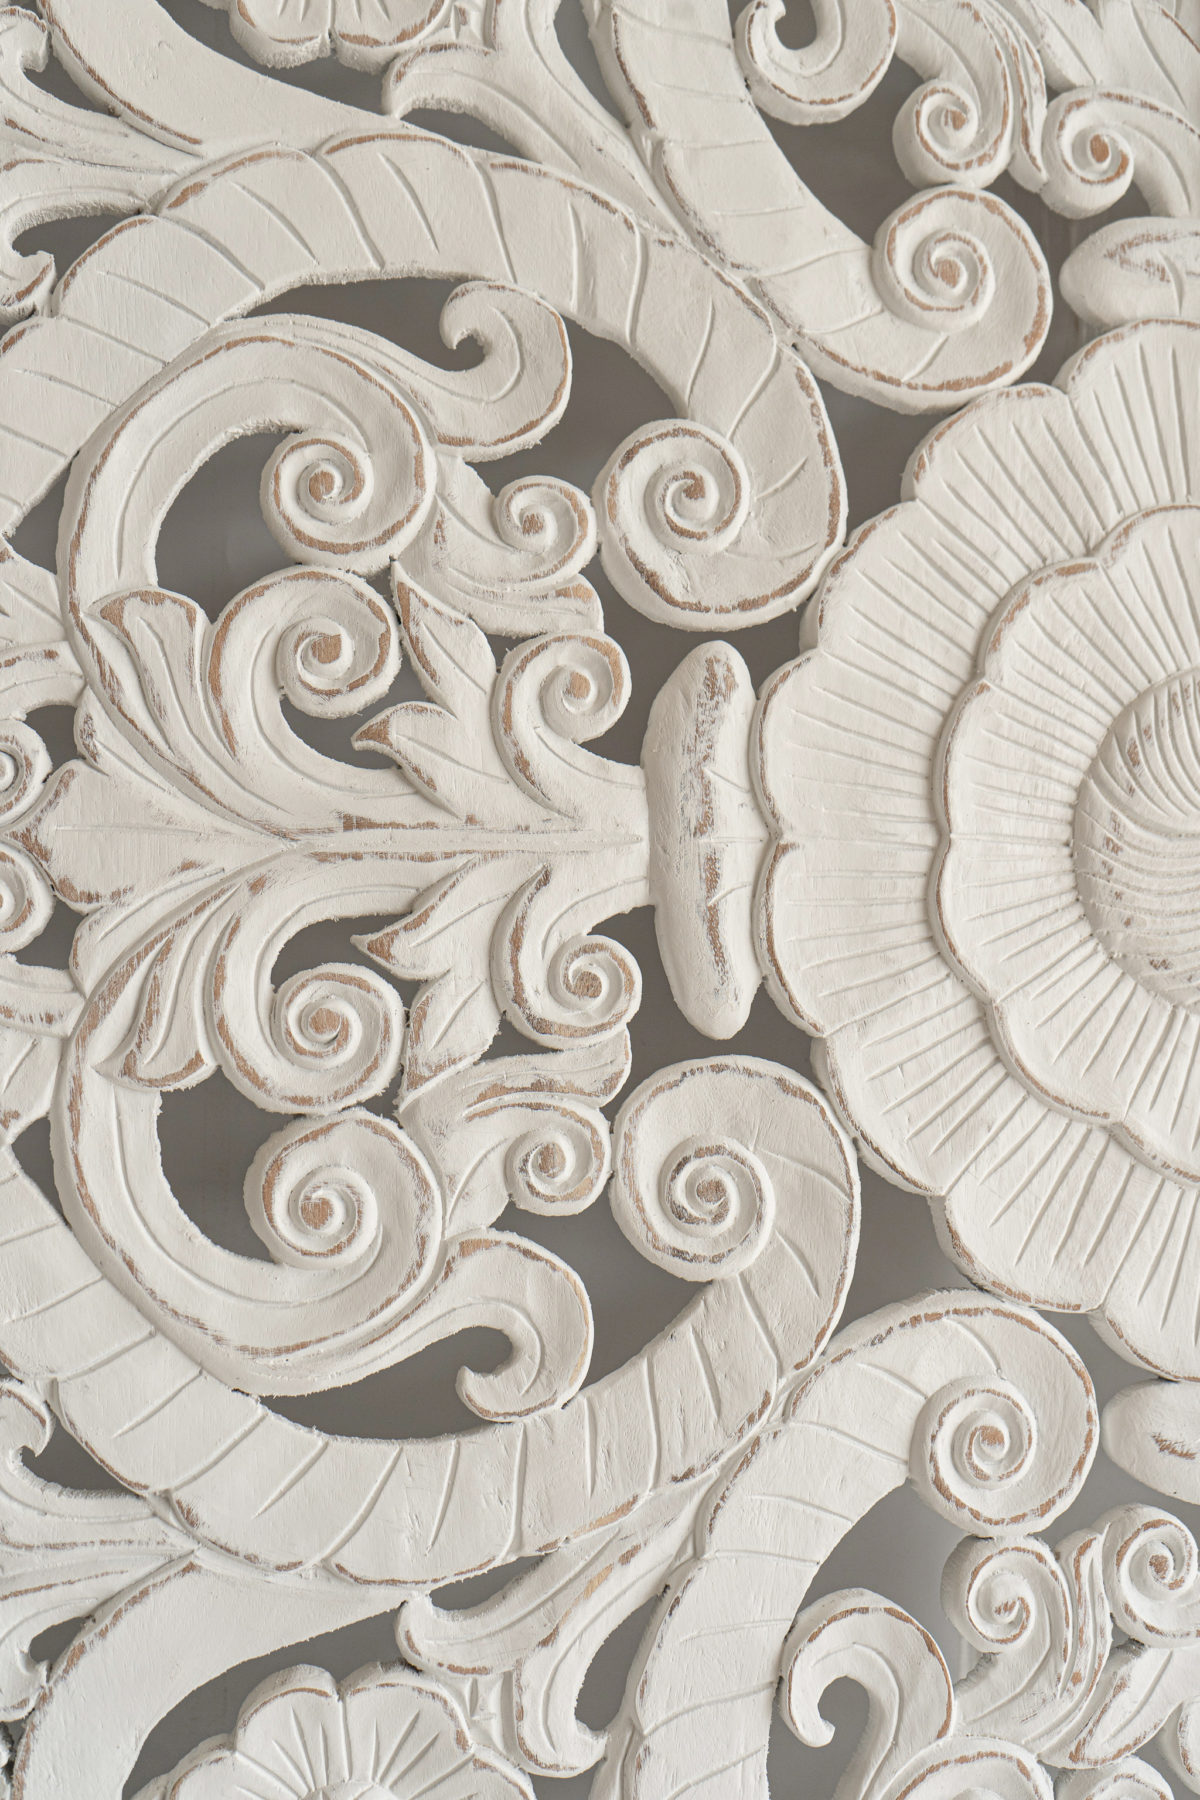 Wood carved balinese design